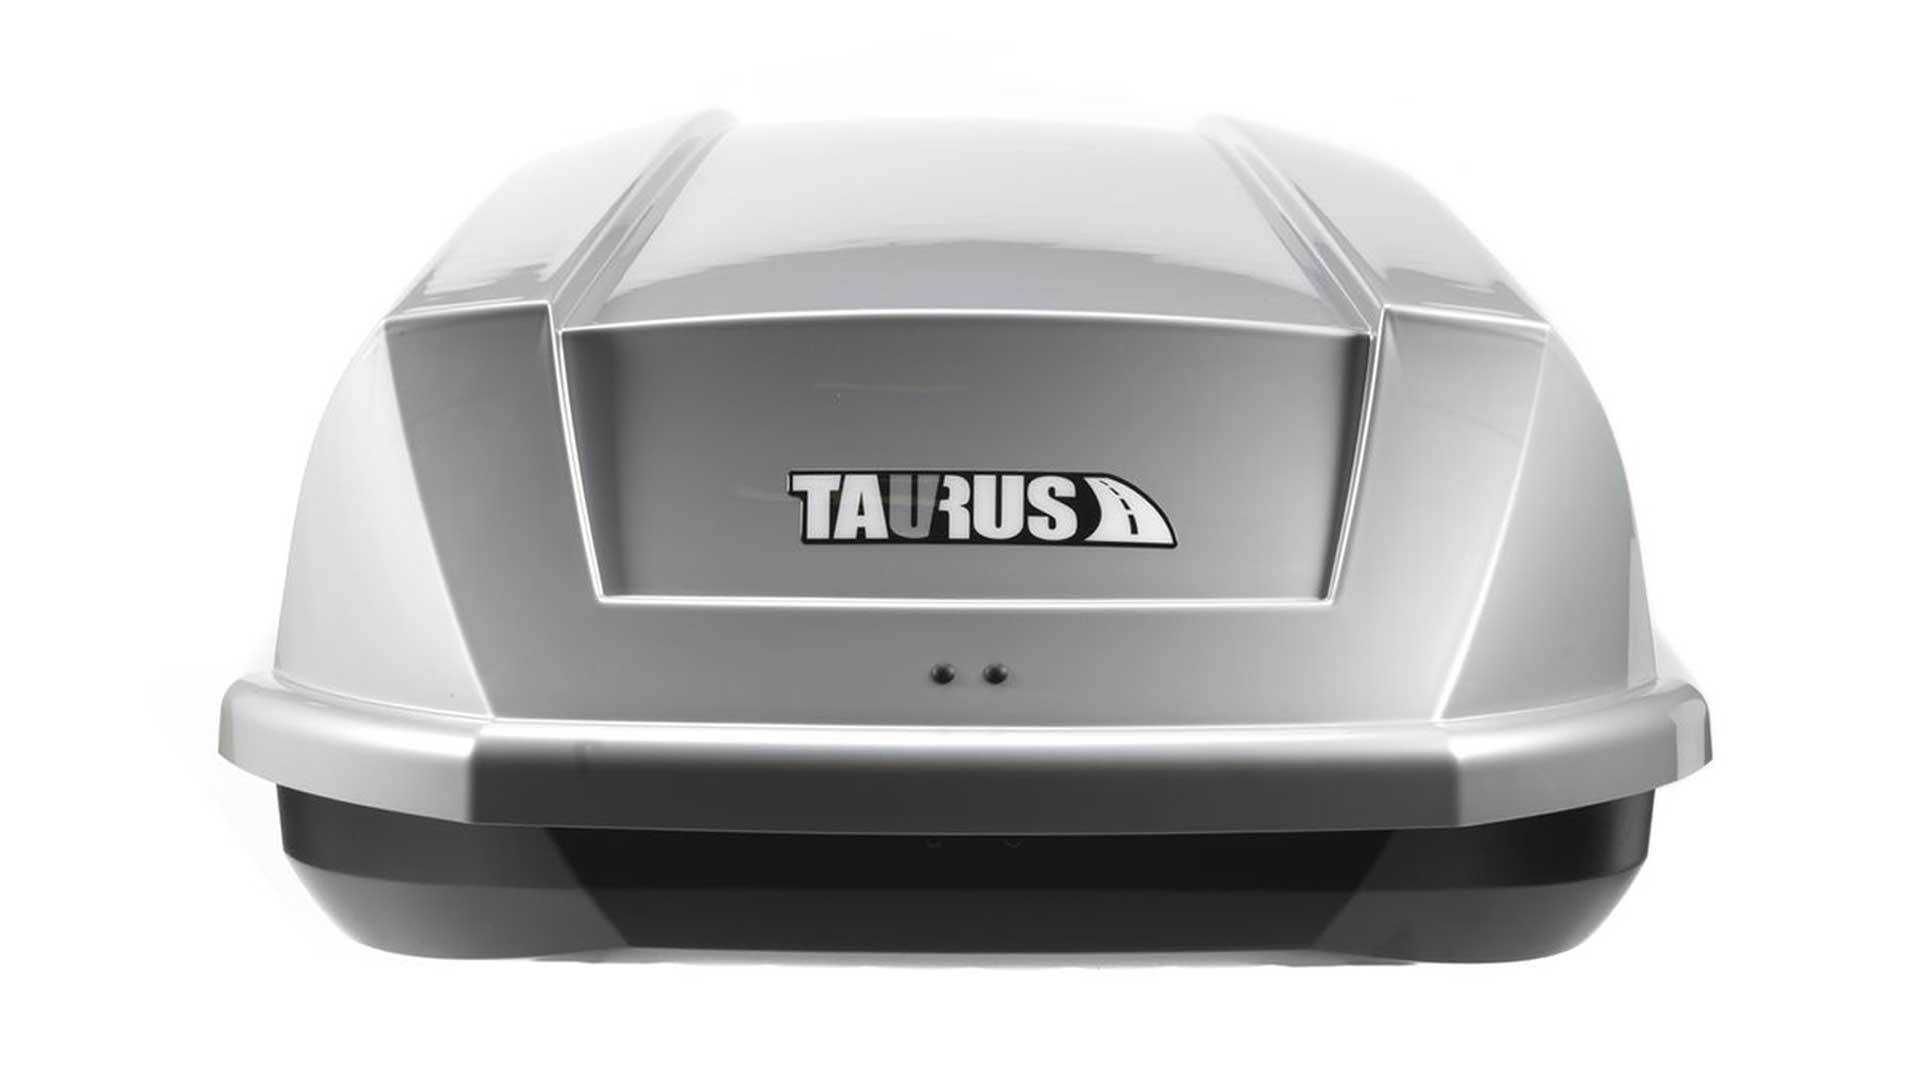 Box dachowy Taurus Adventure 480 srebrny połysk